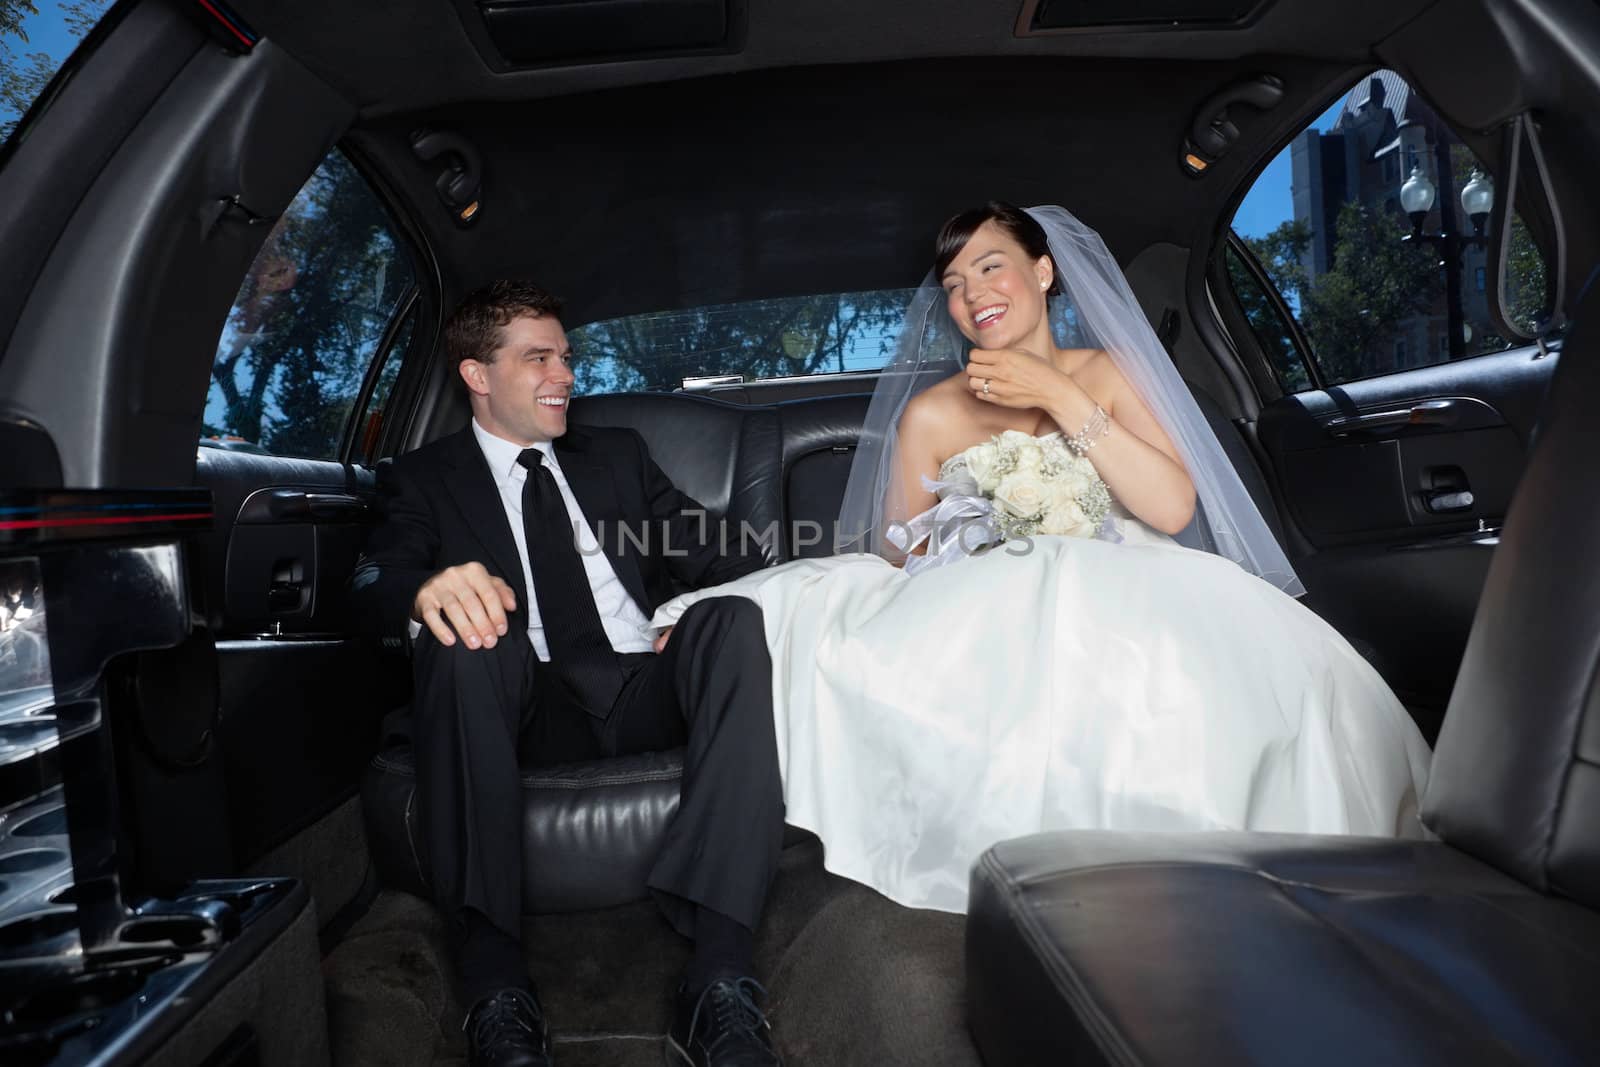 Bride and bridegroom in a luxury wedding limousine